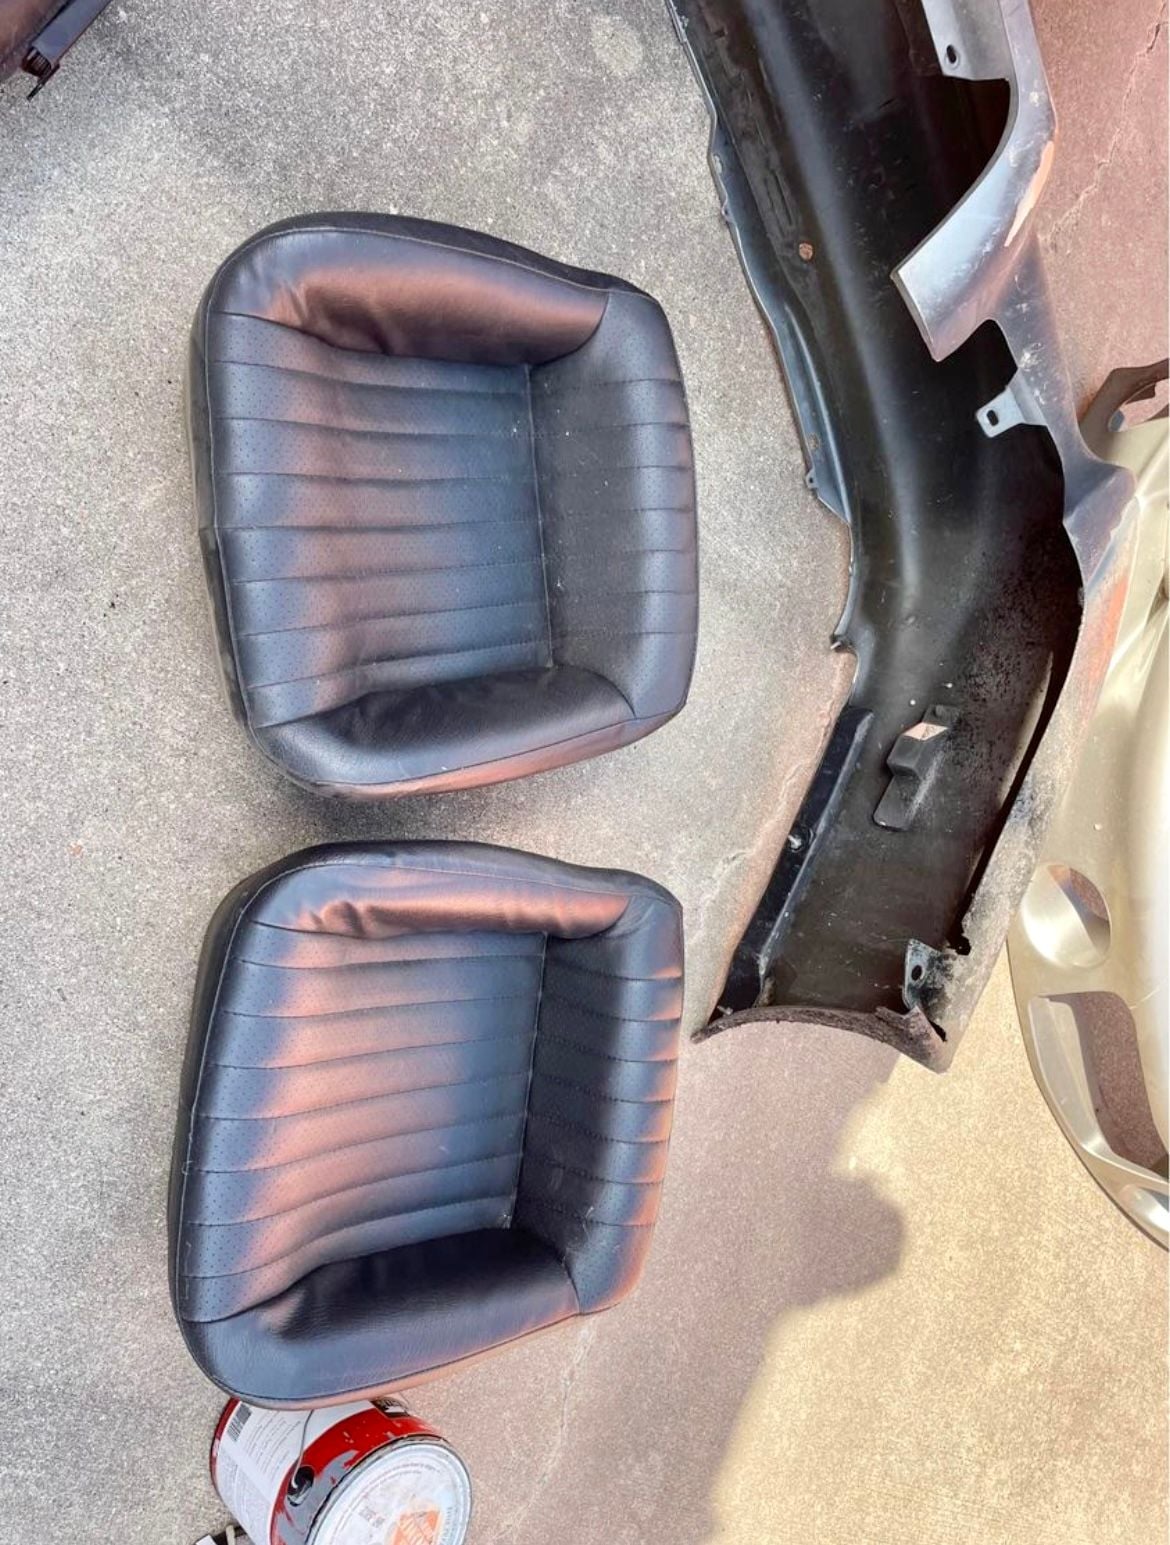 Interior/Upholstery - Trans Am/Fbody black ebony leather seats - Used - 0  All Models - Bastrop, TX 78602, United States